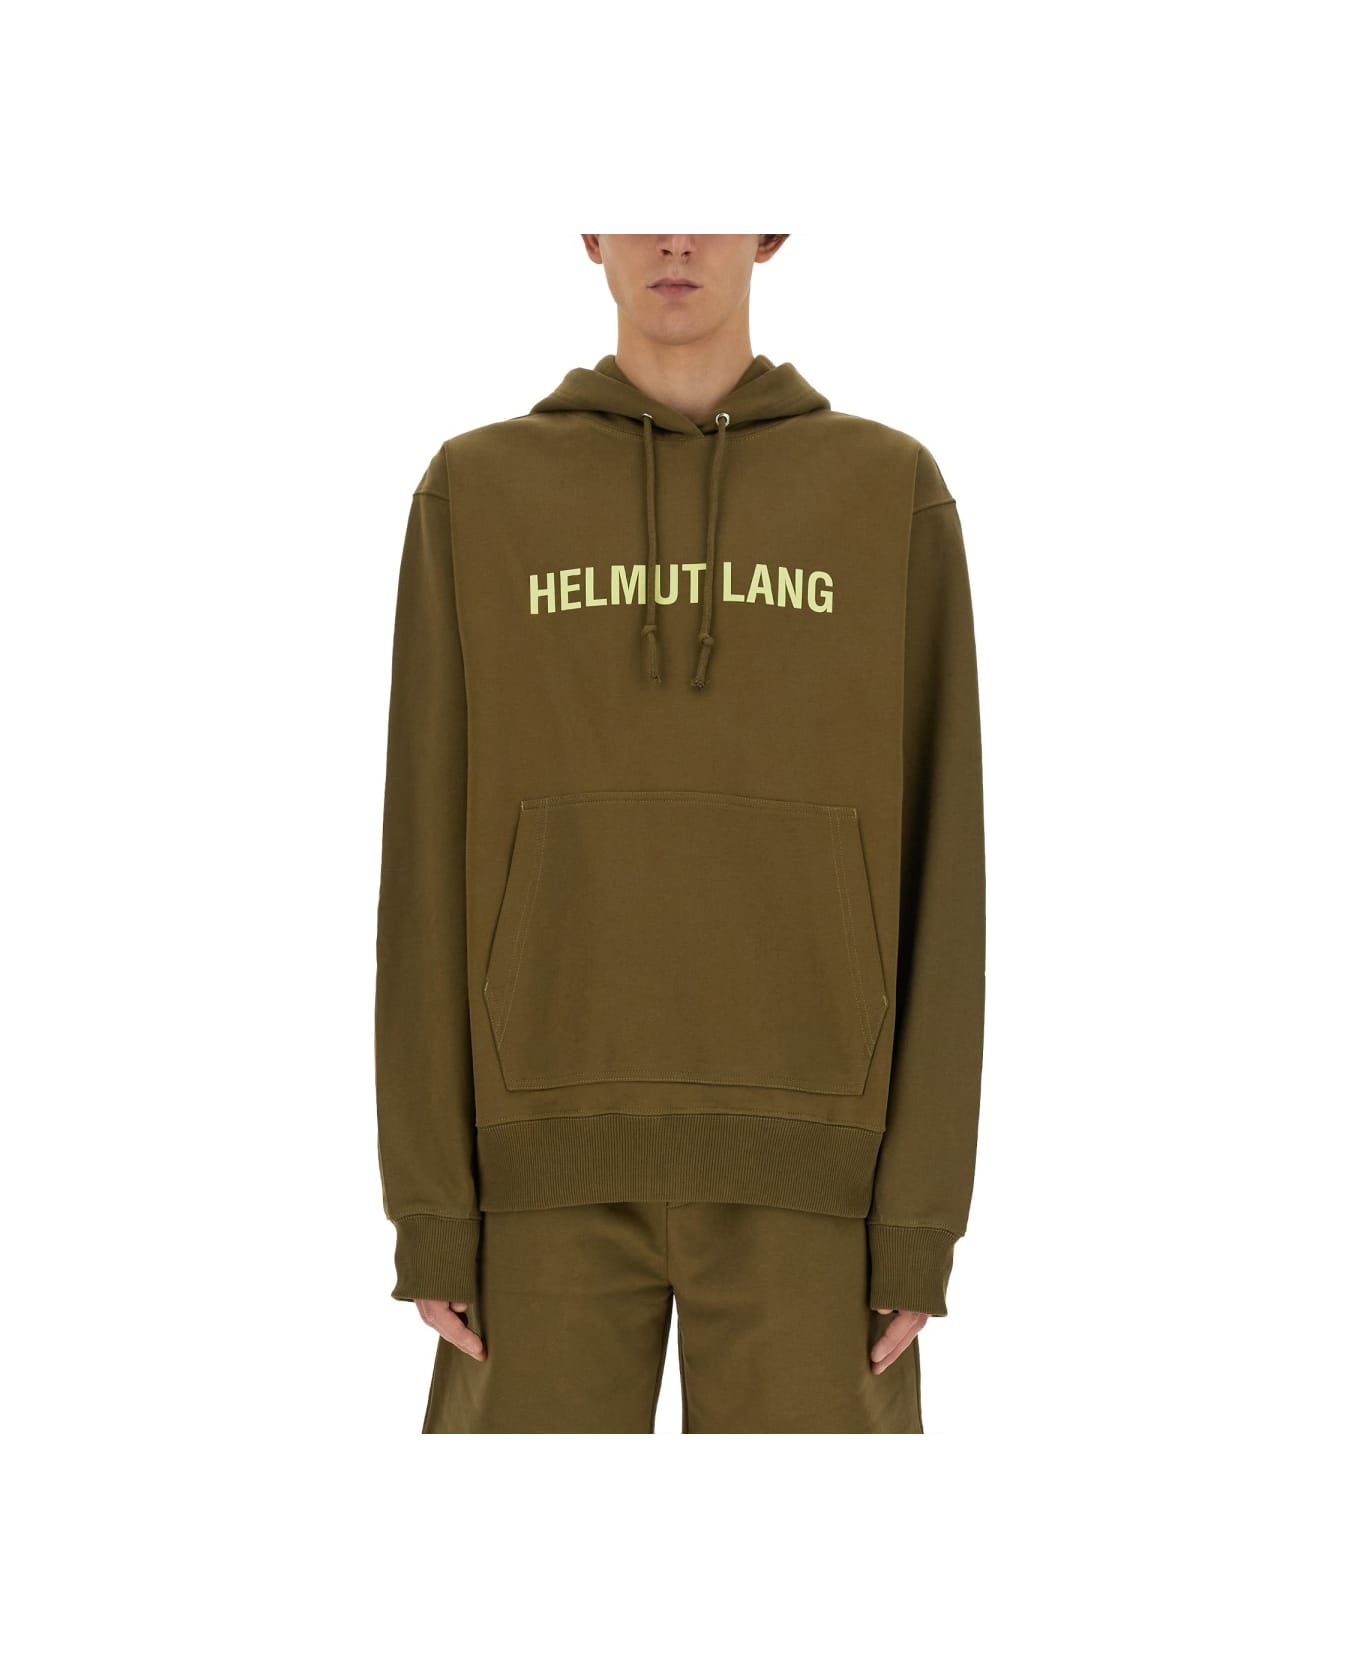 Helmut Lang Sweatshirt With Logo - MILITARY GREEN